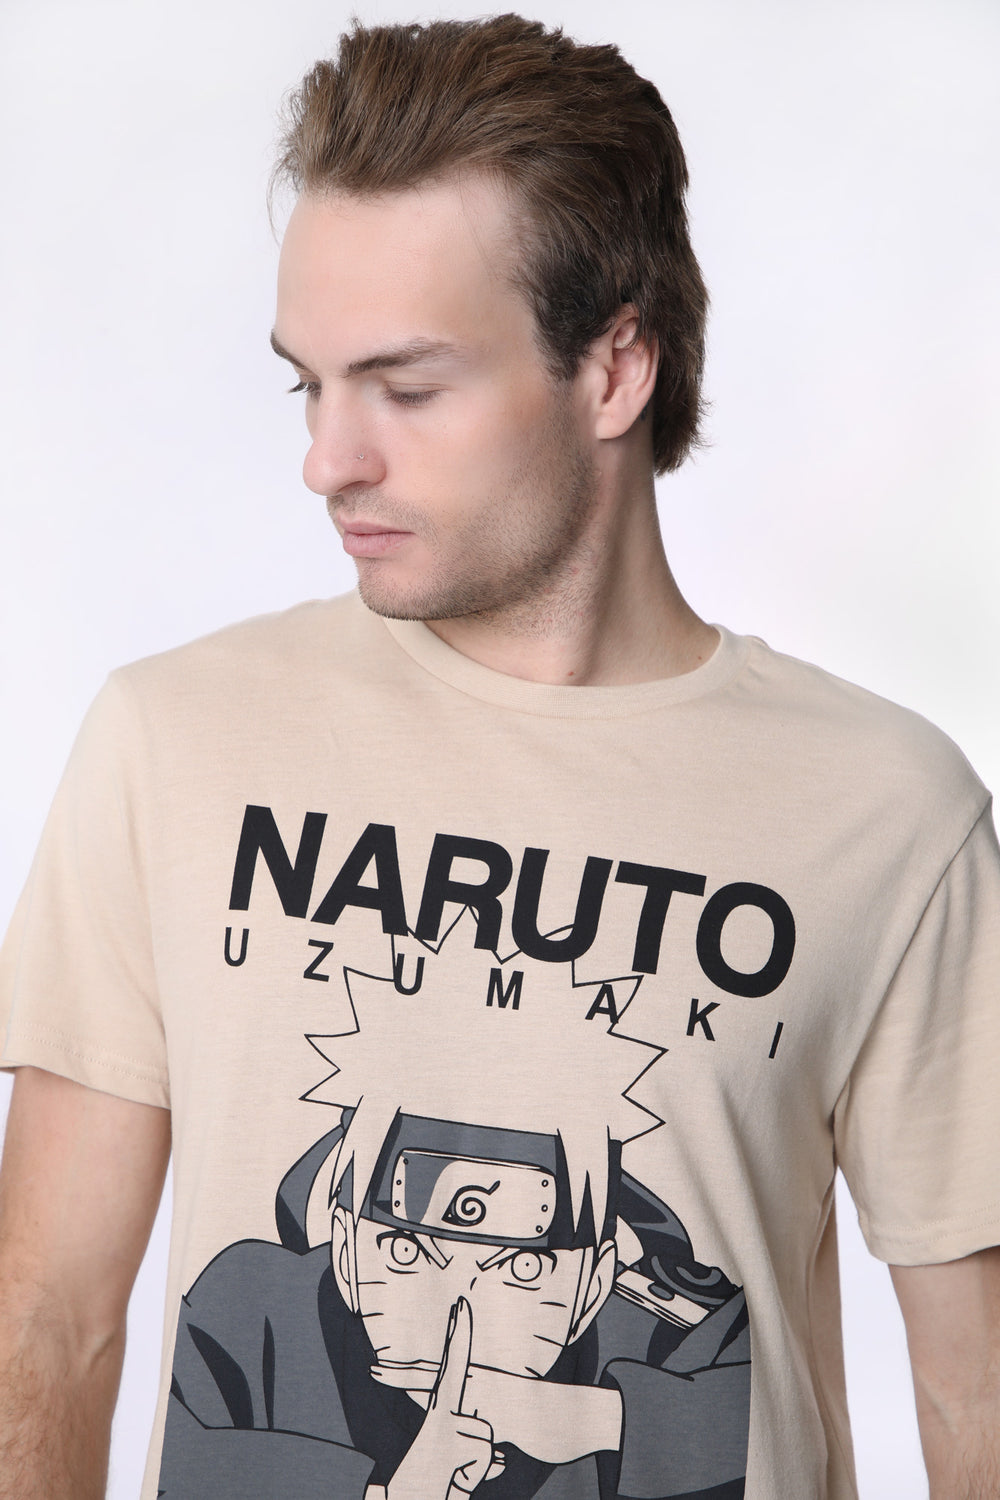 Mens Naruto Uzumaki T-Shirt Mens Naruto Uzumaki T-Shirt